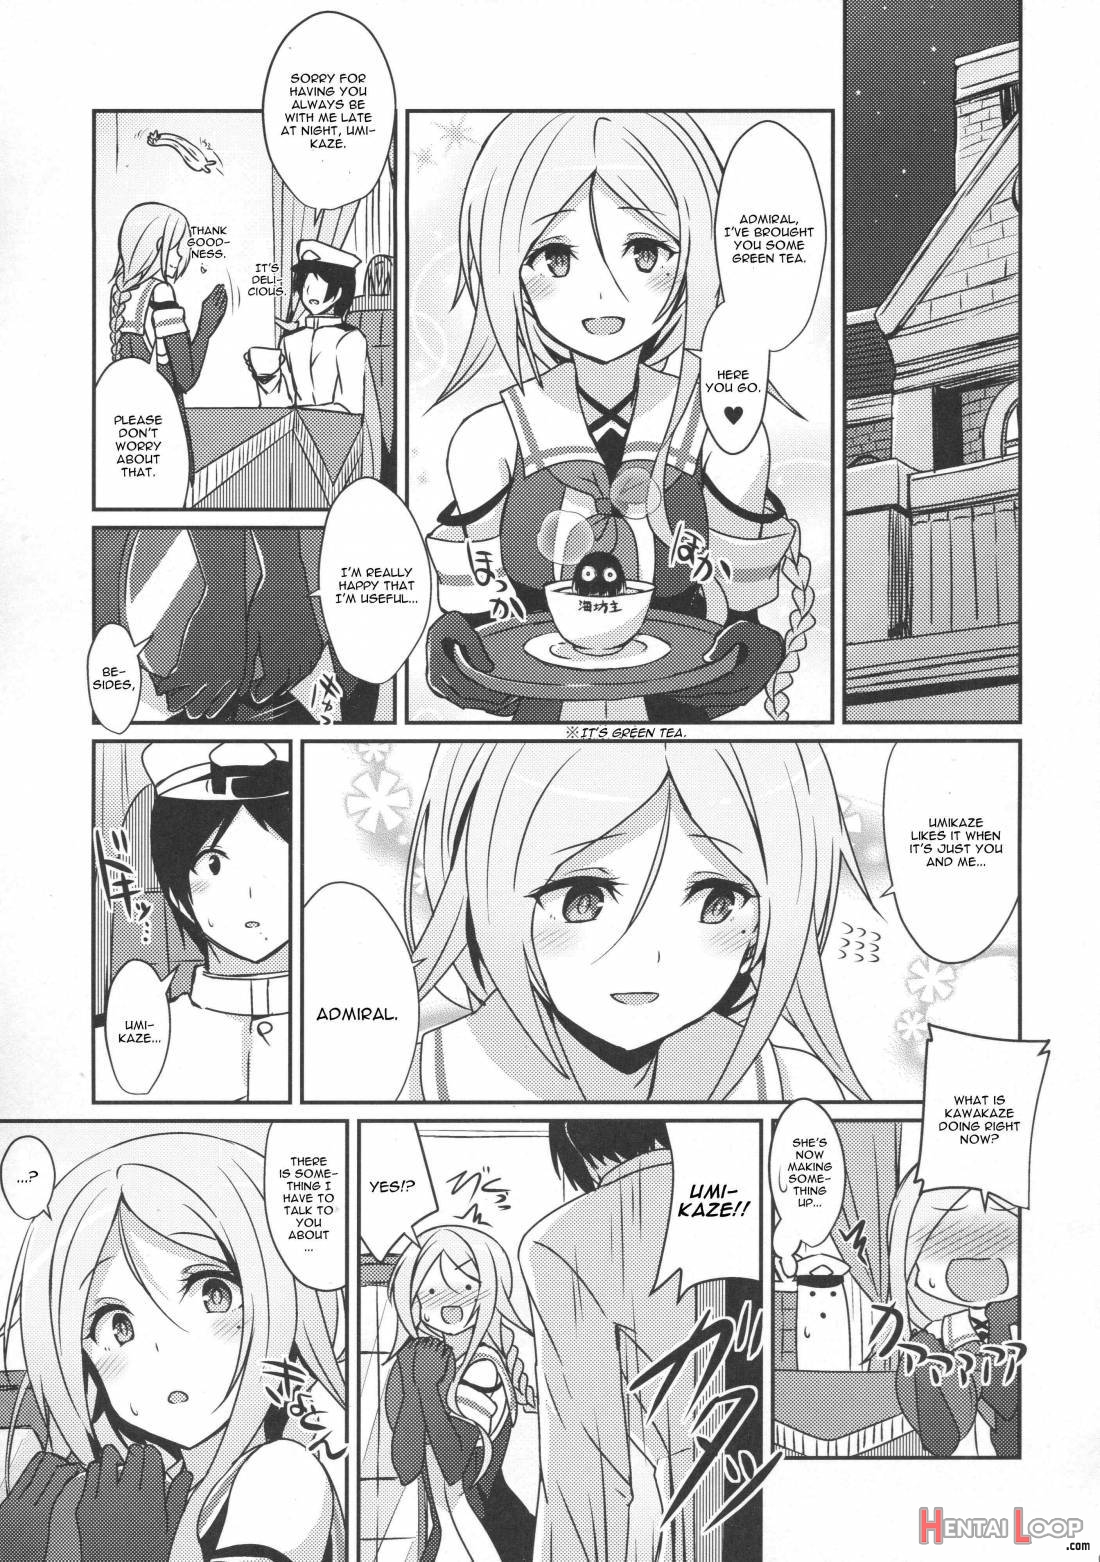 Umikaze no Kekkon Shoya page 2